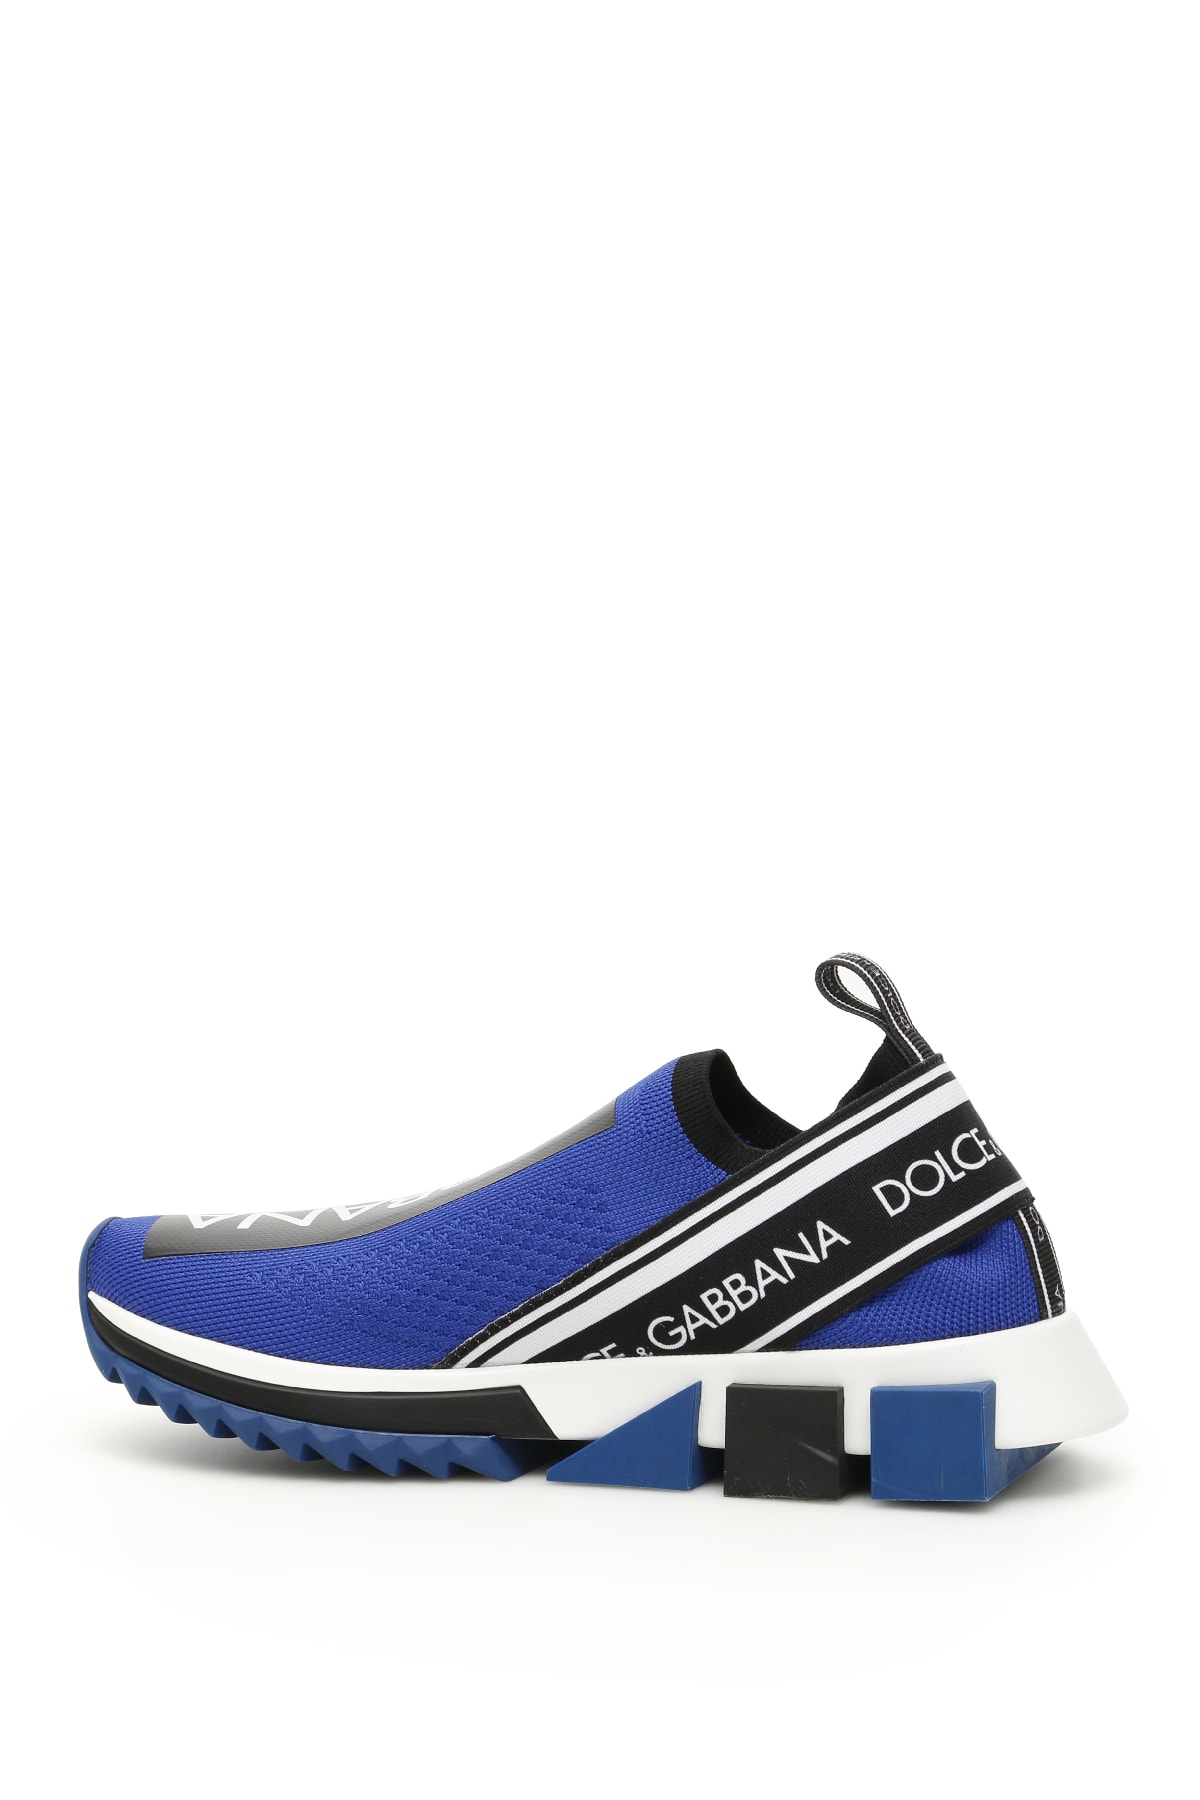 Dolce & Gabbana Dolce & Gabbana Running Knit Sneakers - BLU/NERO (Blue ...